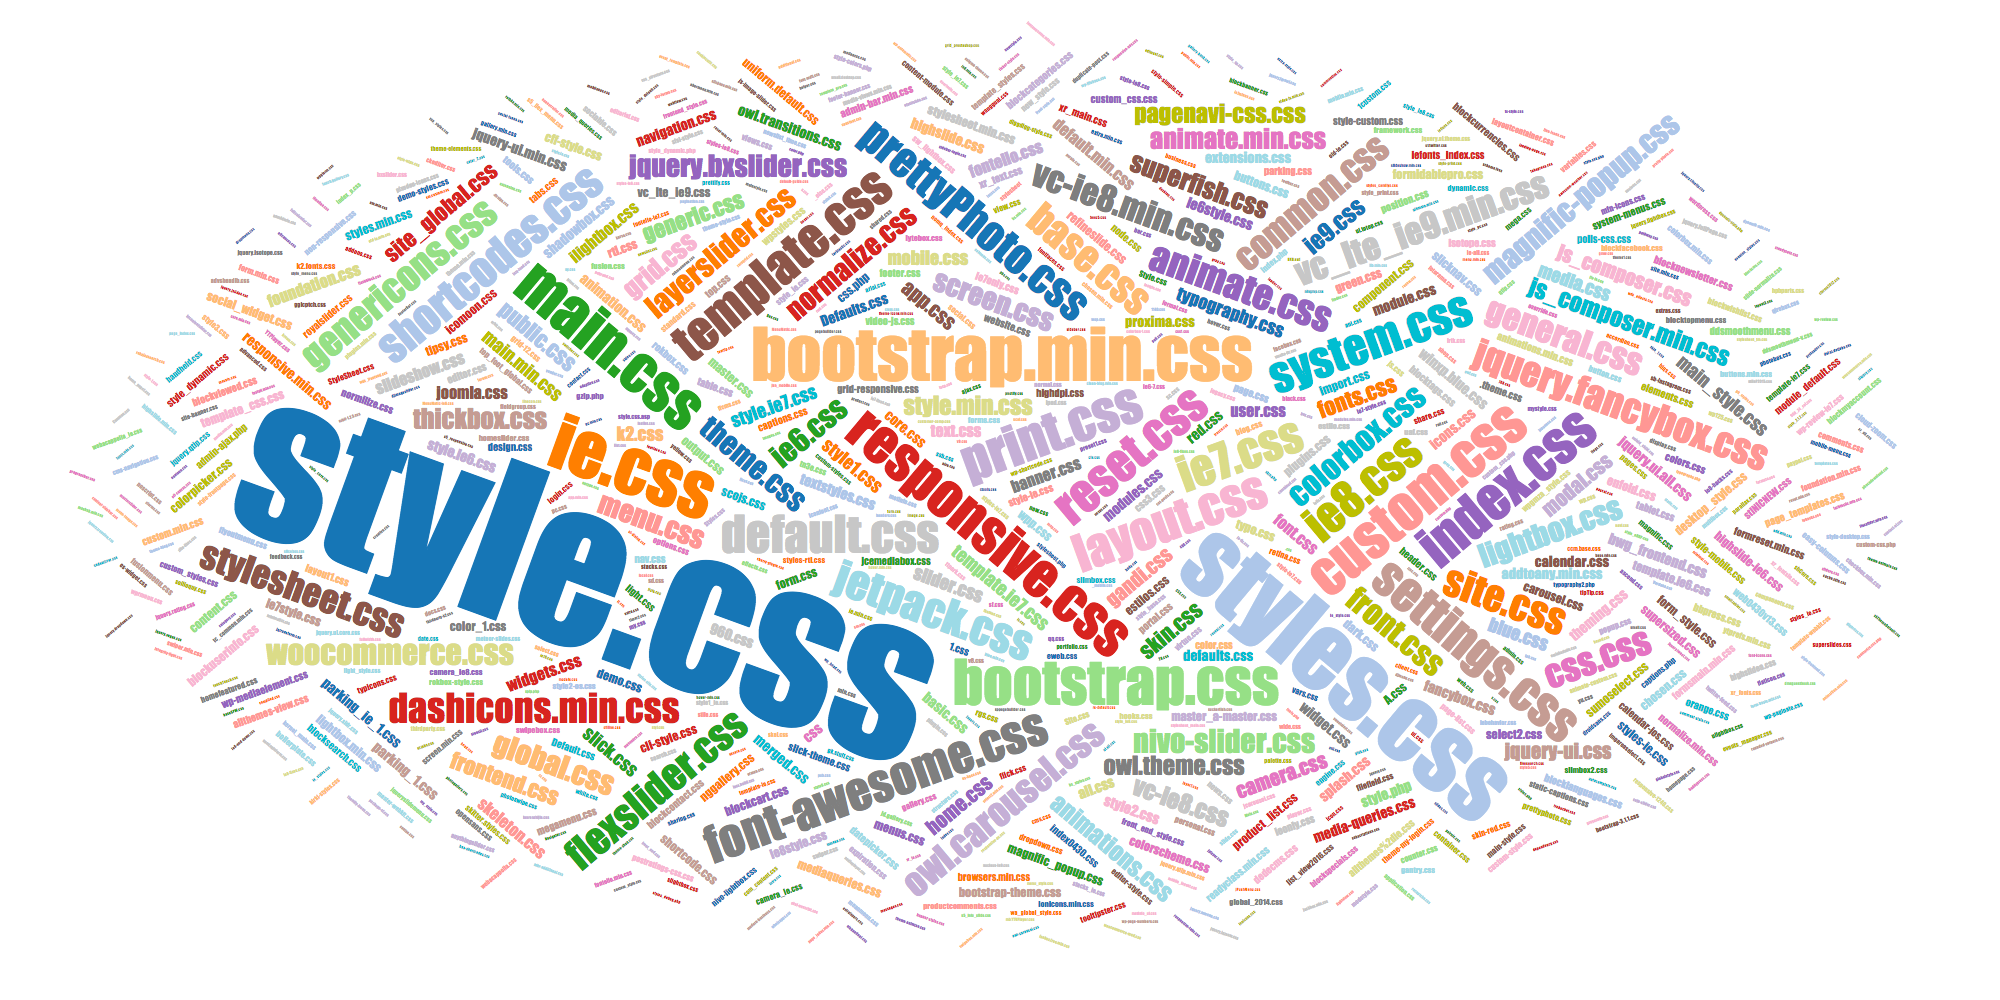 Popular names of CSS files wp-mediaelement.min.css, widget.css, etc.